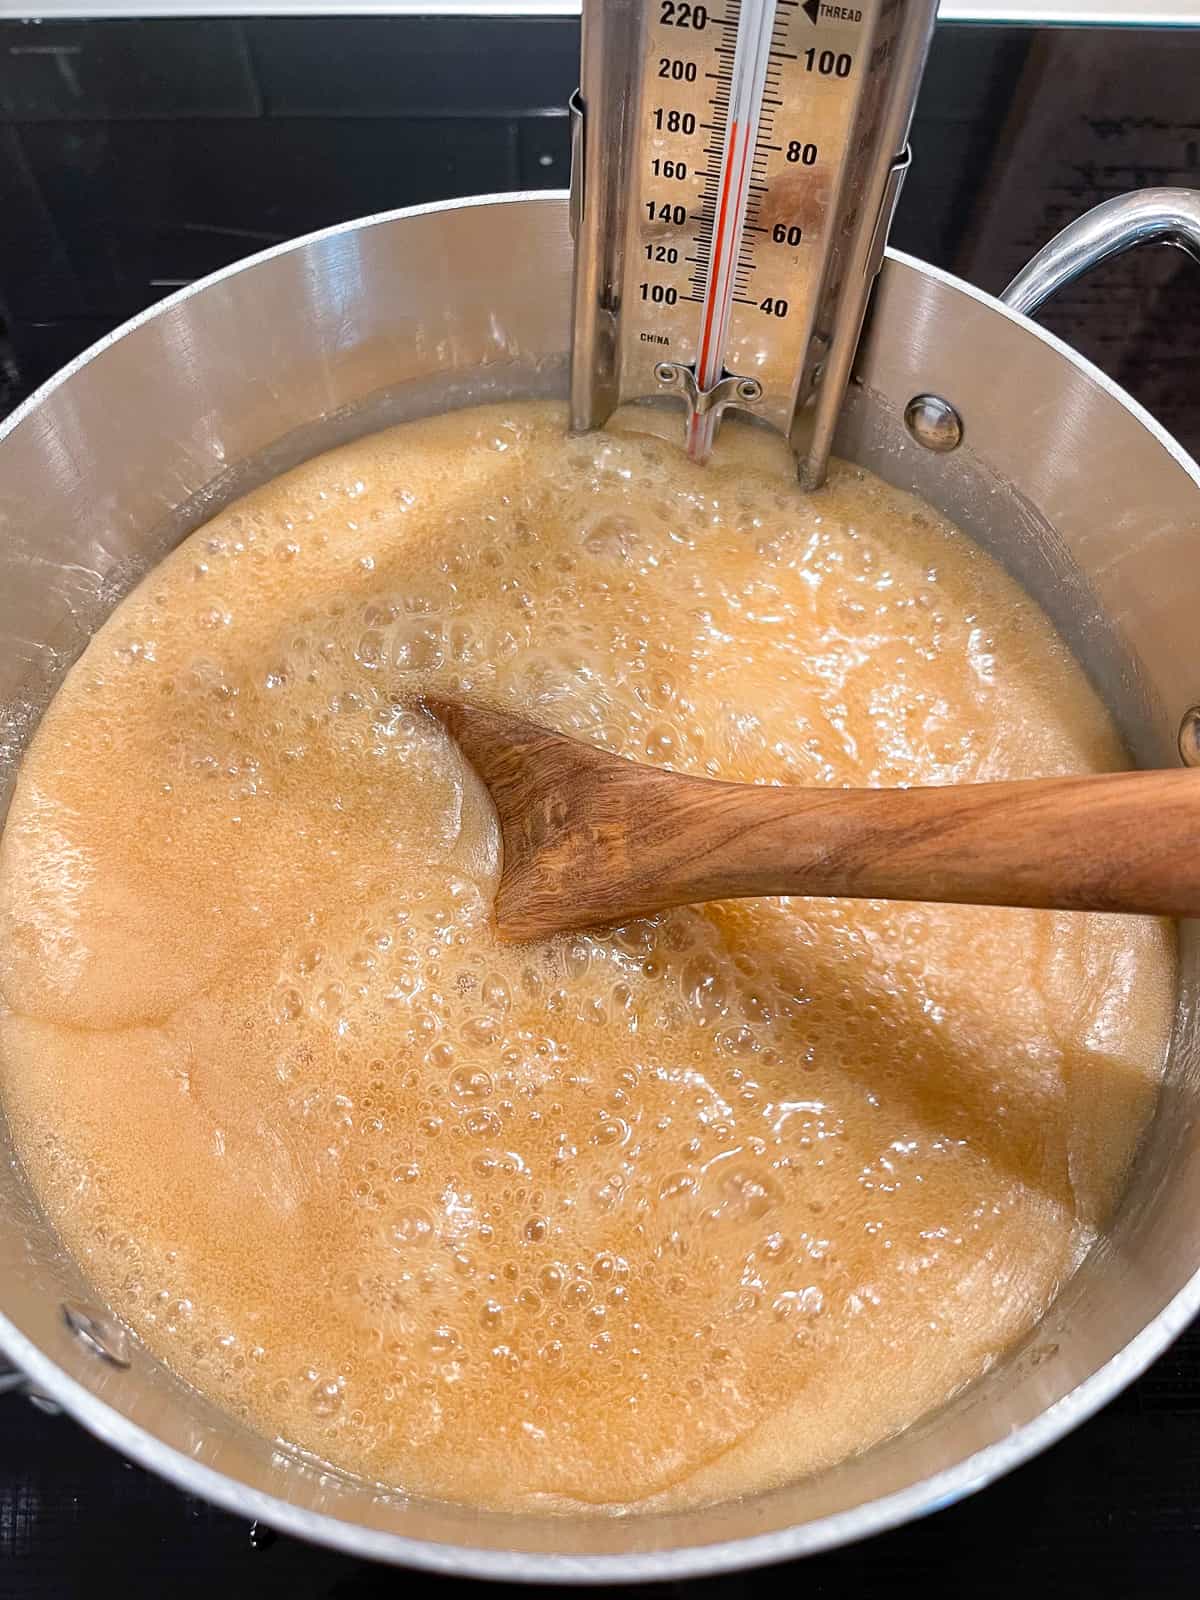 The caramel mixture at 180 degrees.